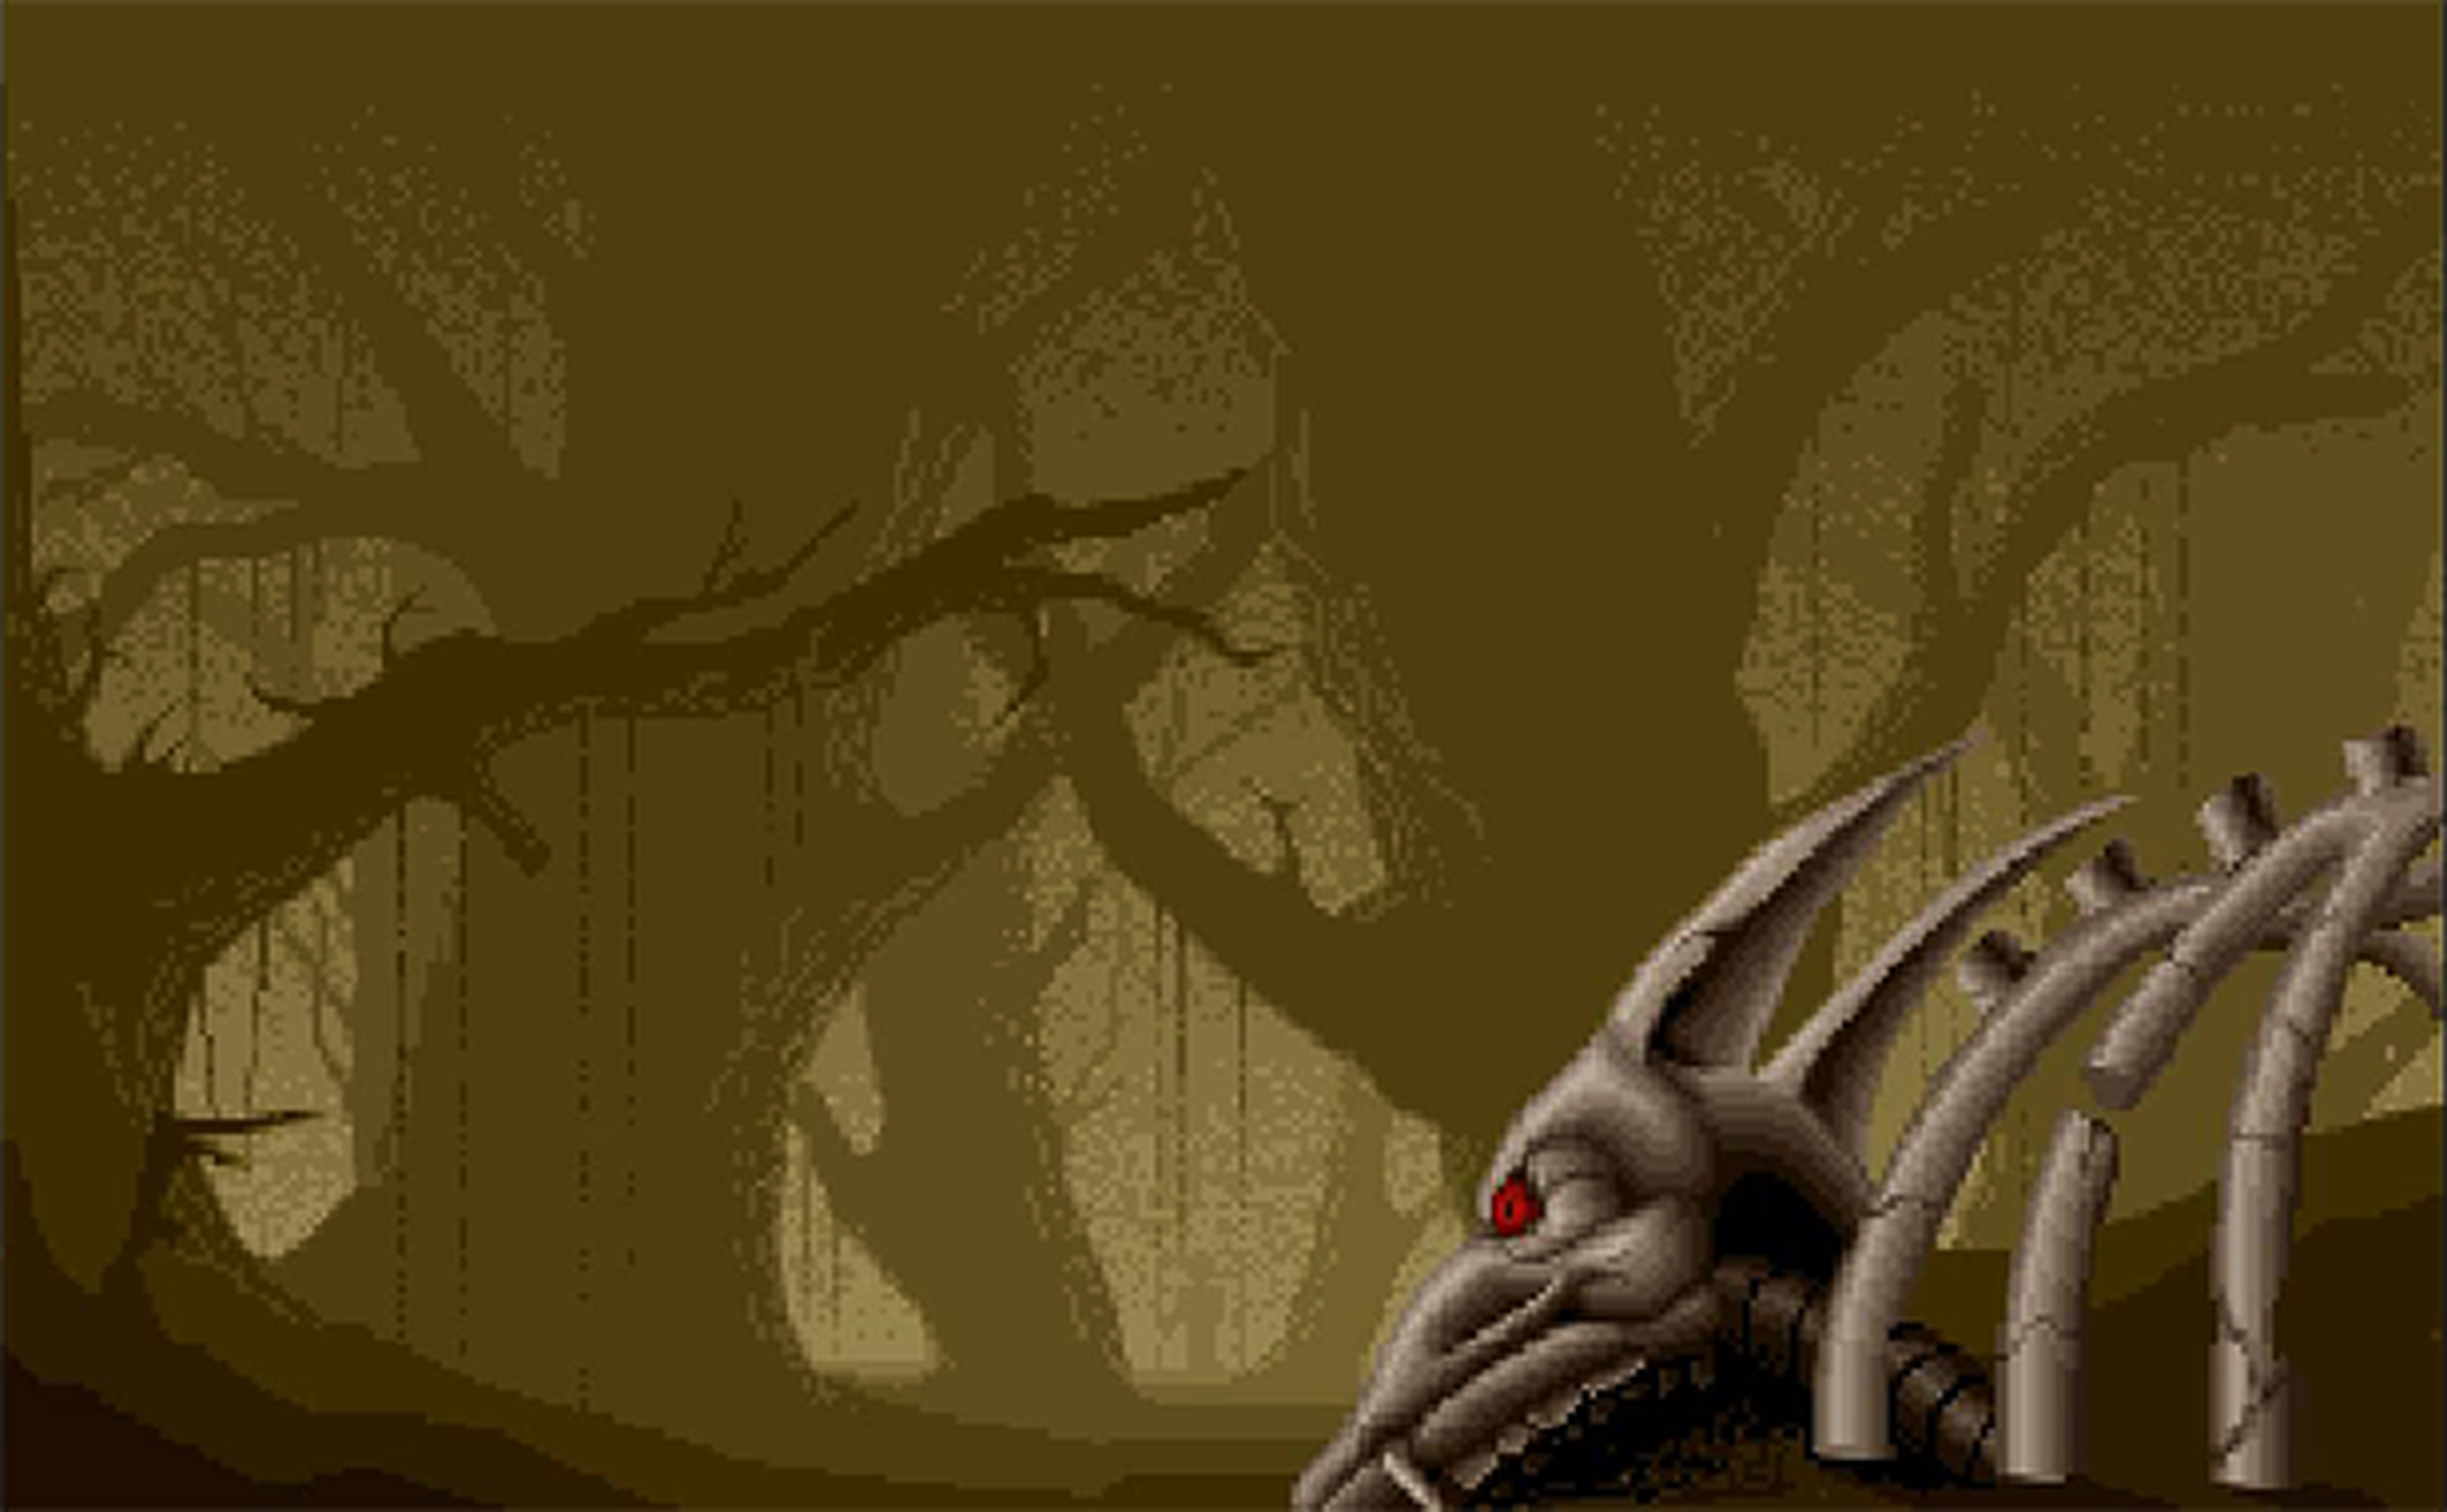 Shadow of the Beast - Análisis retro